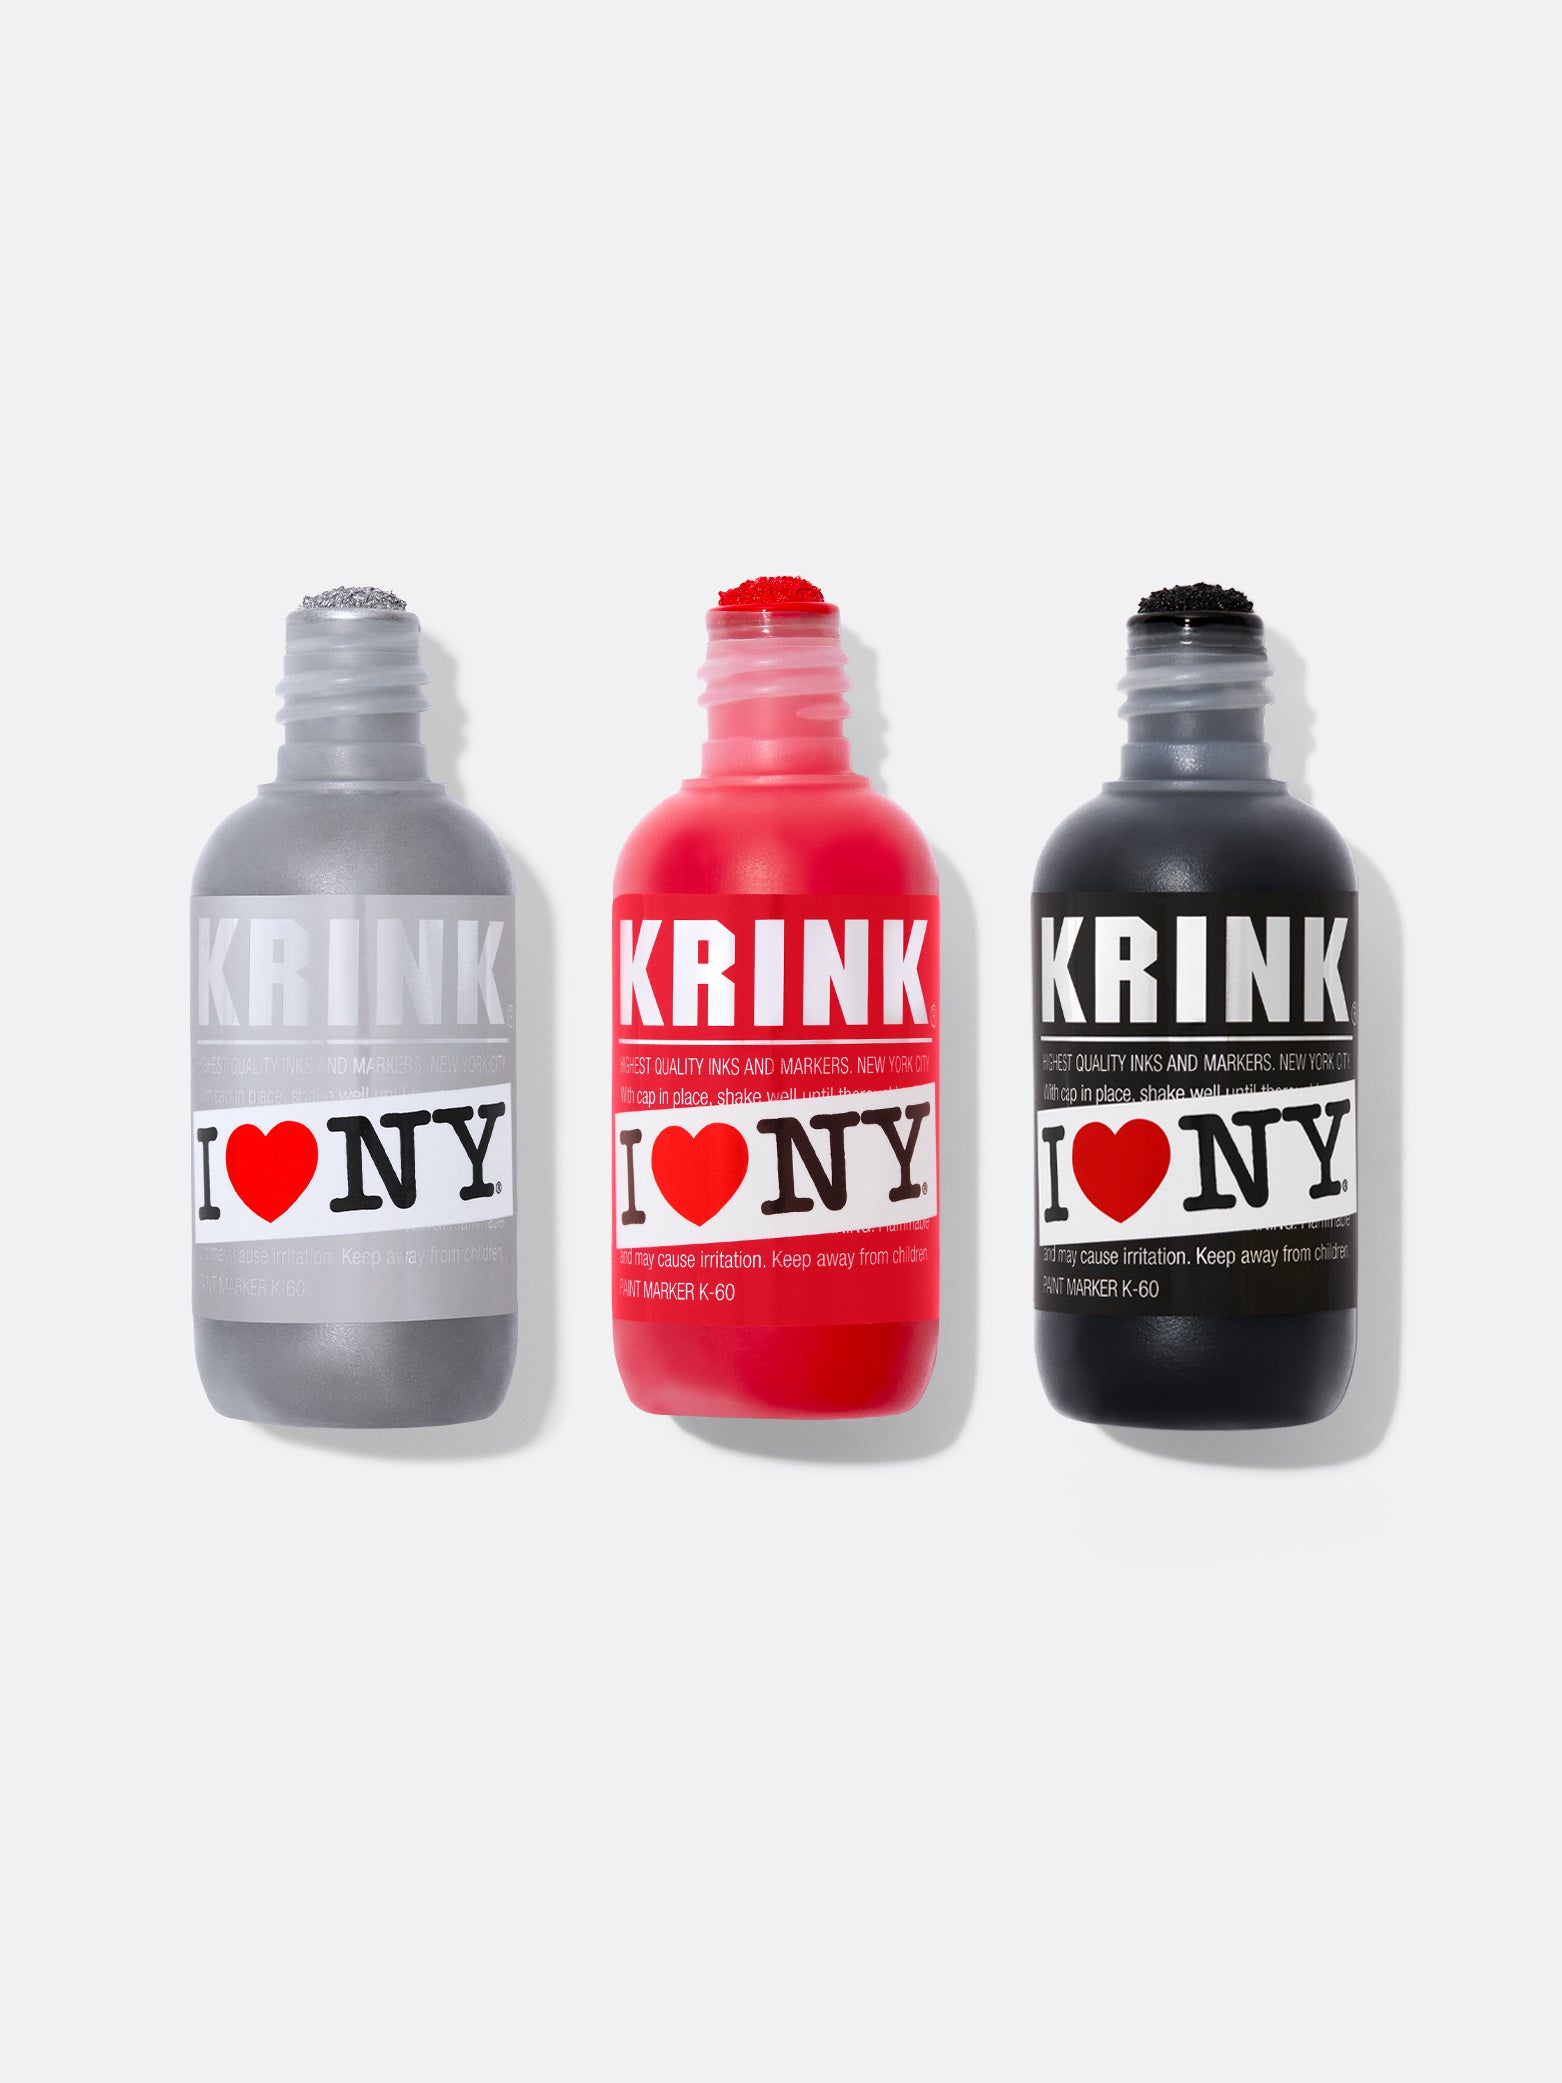 Krink K-60 Chrome Paint Marker